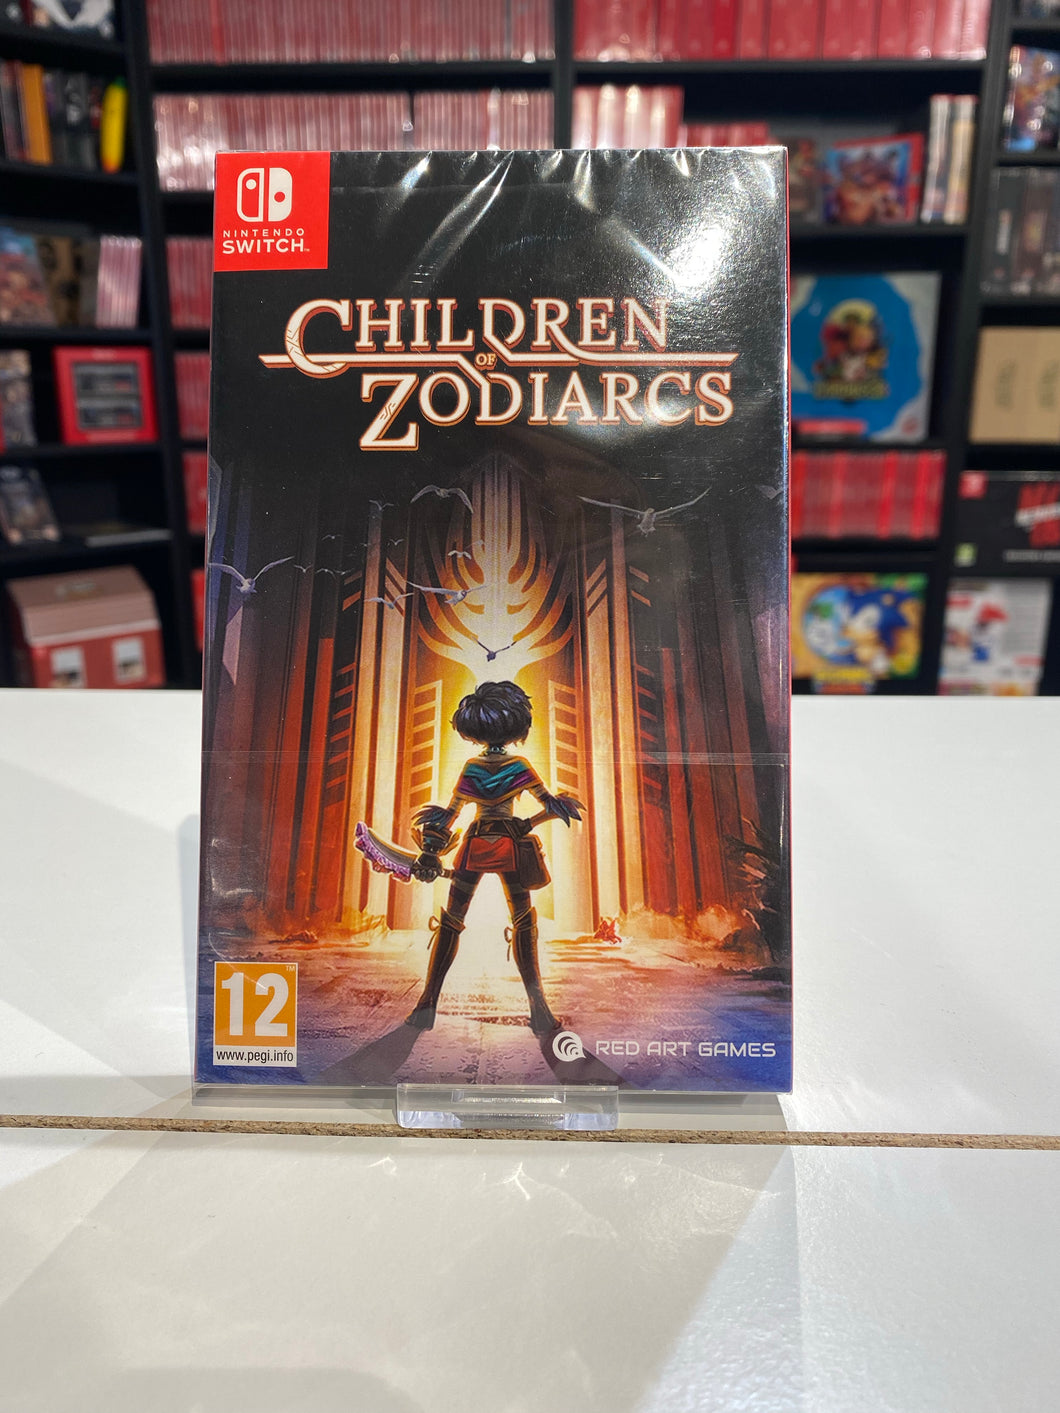 Children of Zodiarcs / Red Art Games / x2800 / Switch